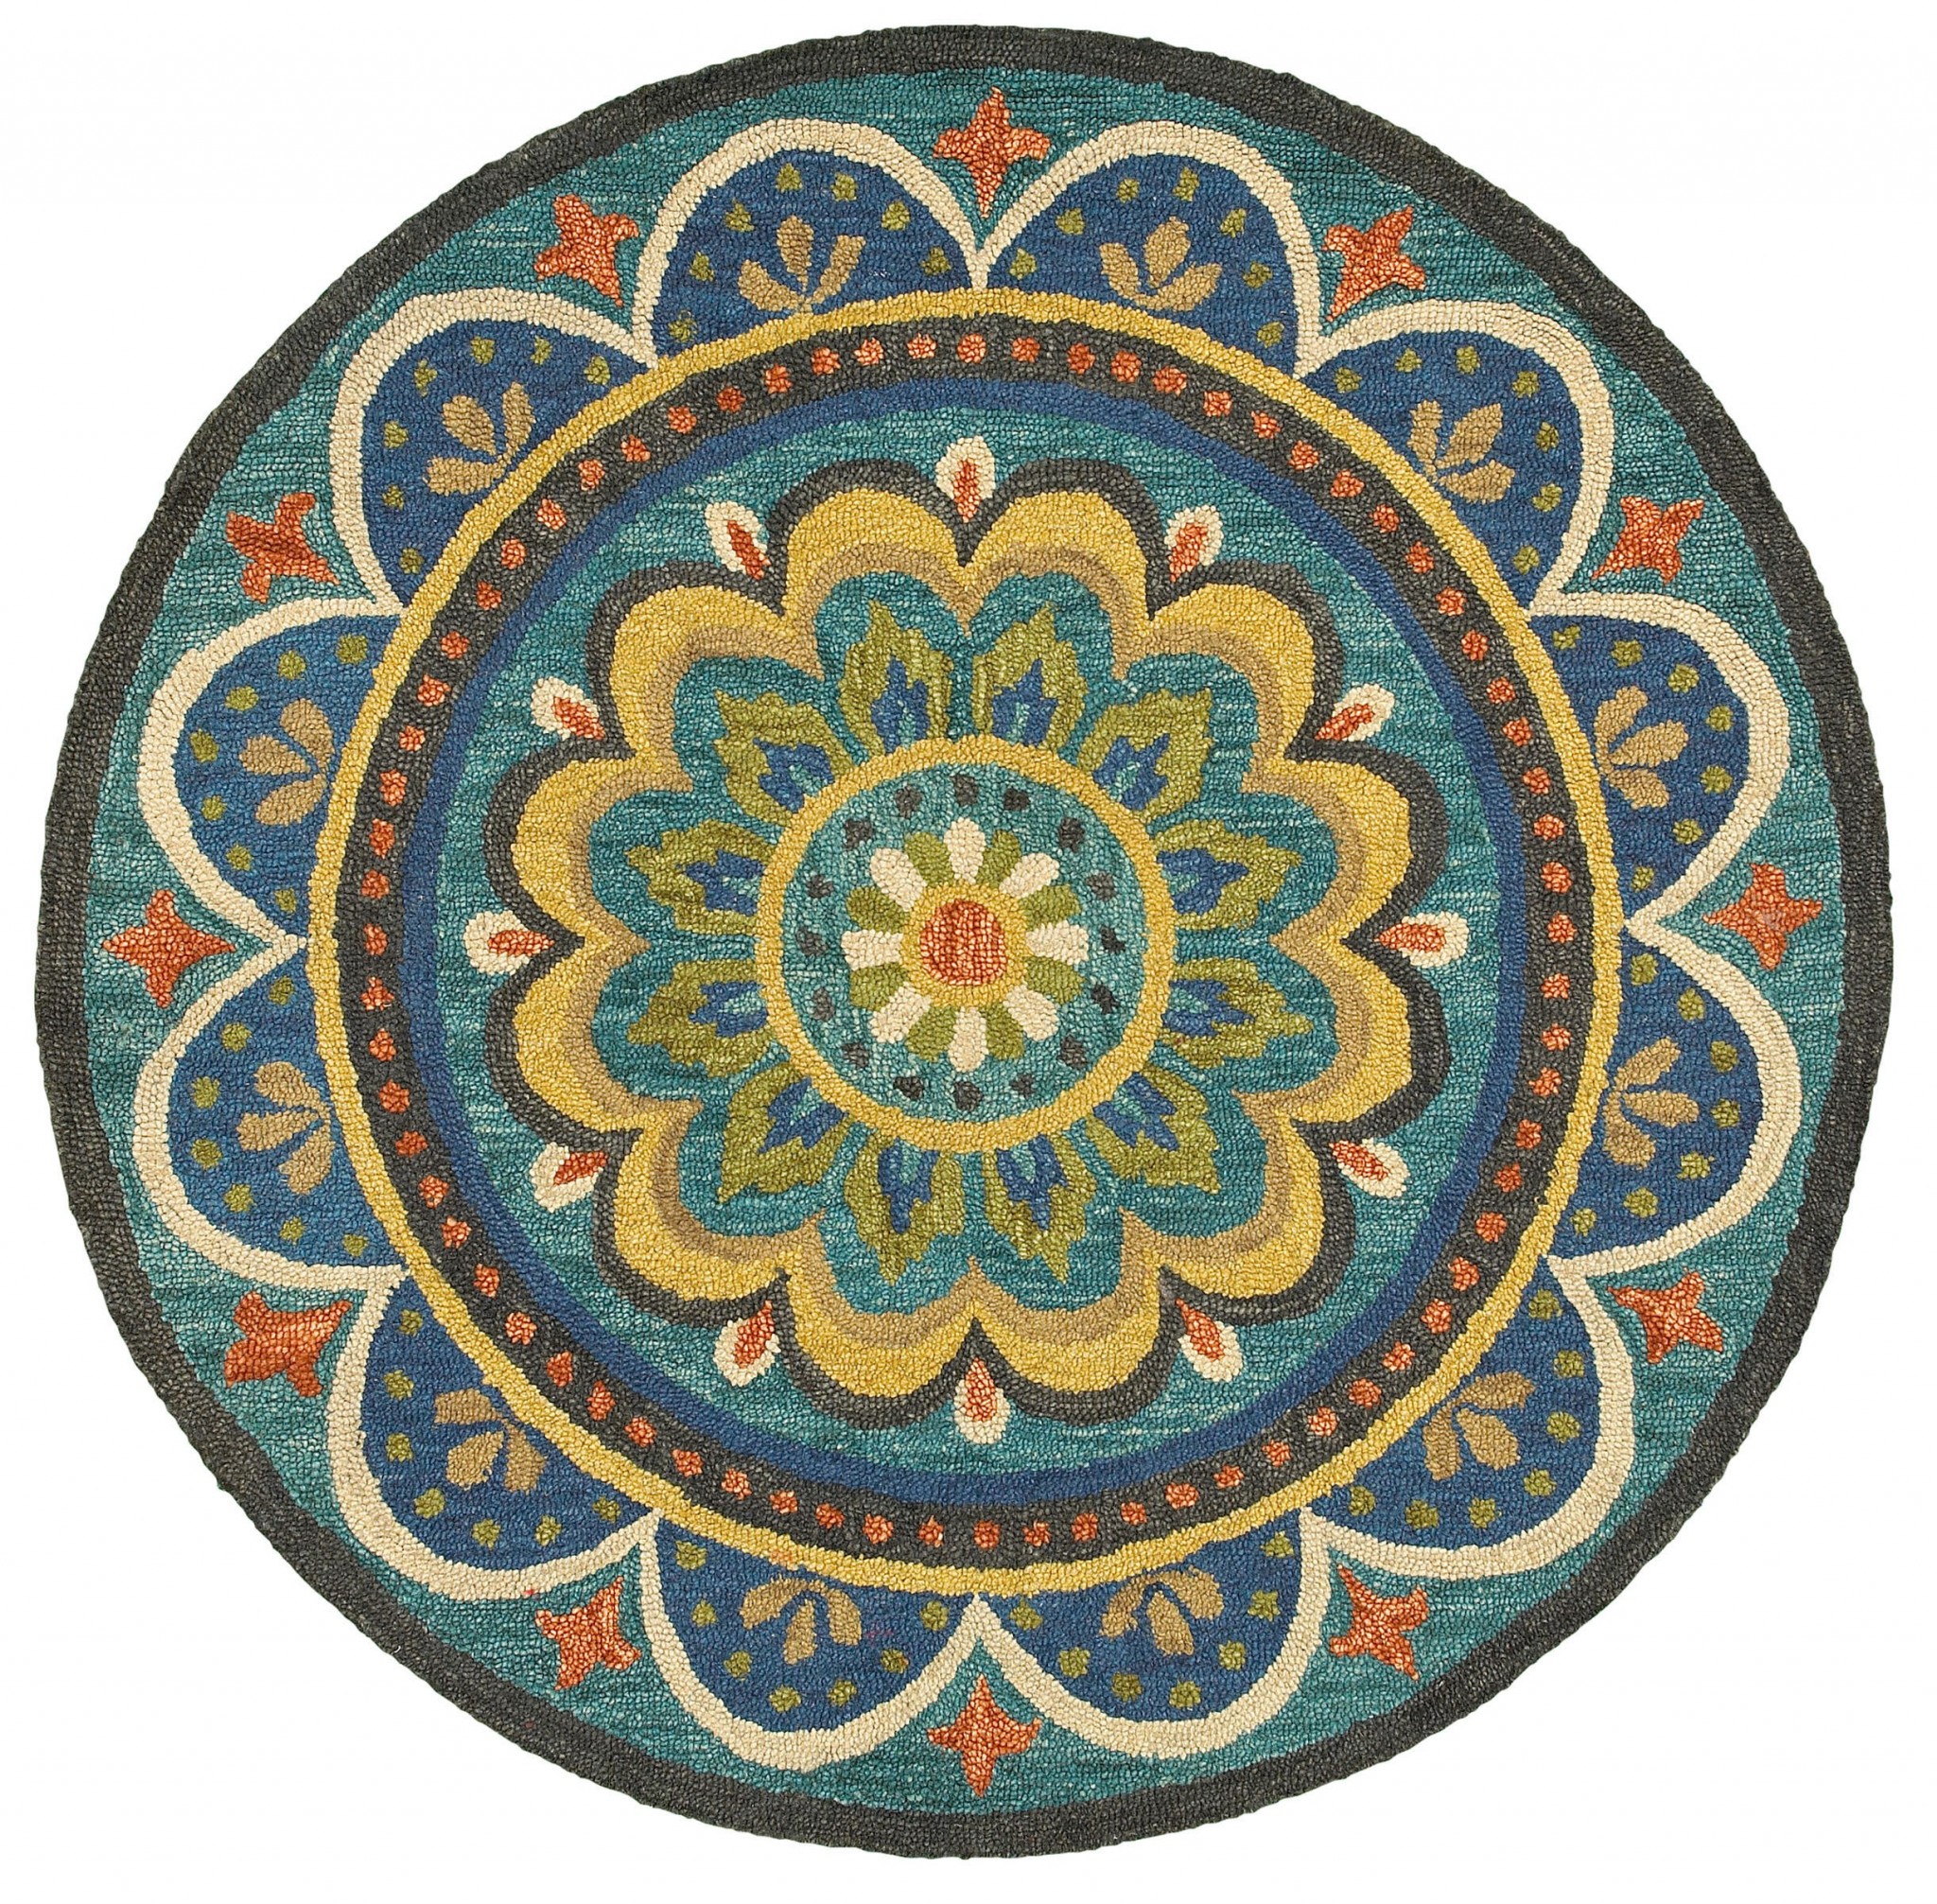 4’ Round Blue Floral Mandala Area Rug-393633-1